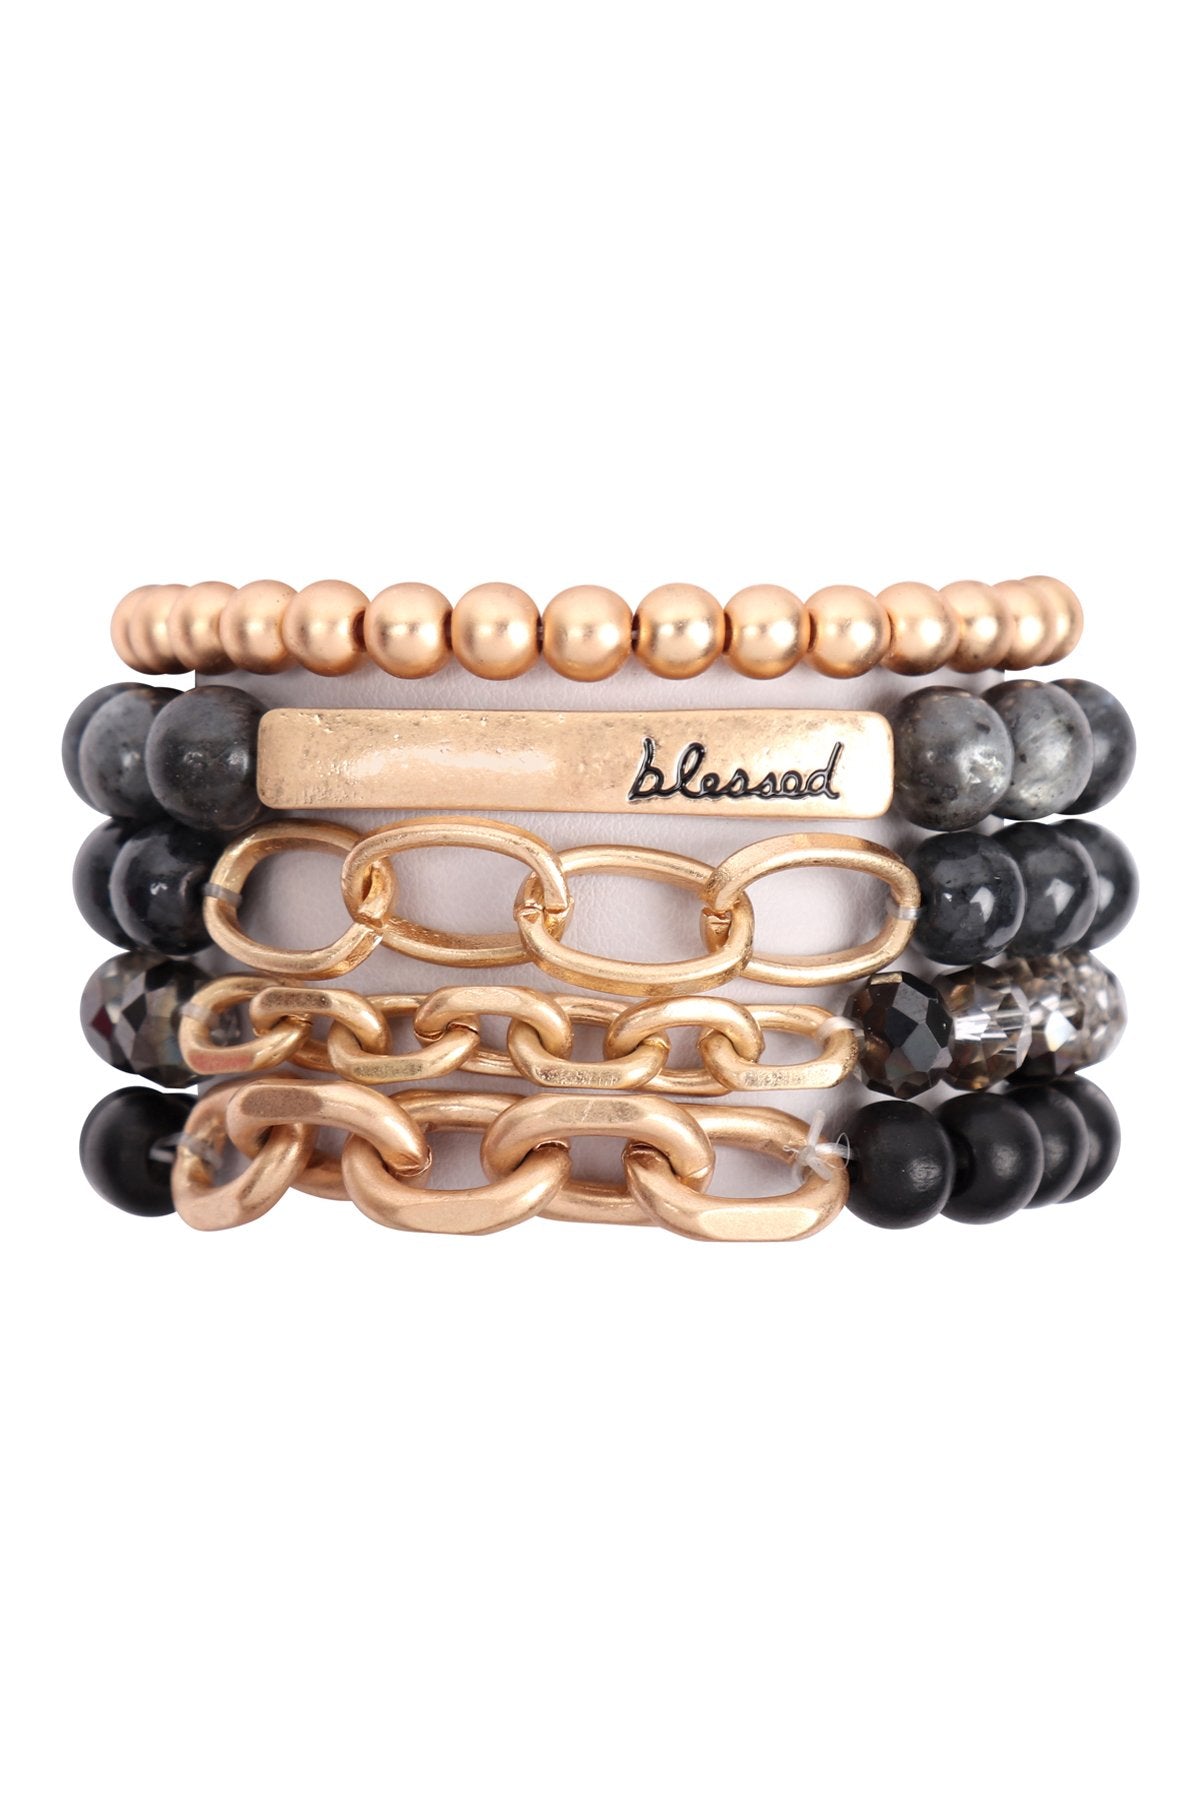 Hdb2996 - "Blessed" Charm Multiline Beaded Bracelet